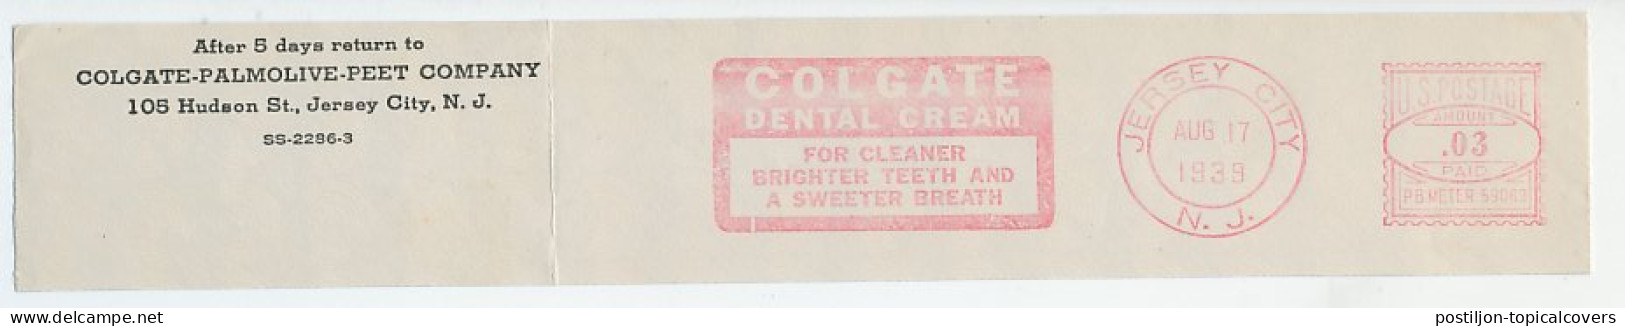 Meter Top Cut USA 1939 Dental Cream - Colgate - Medizin